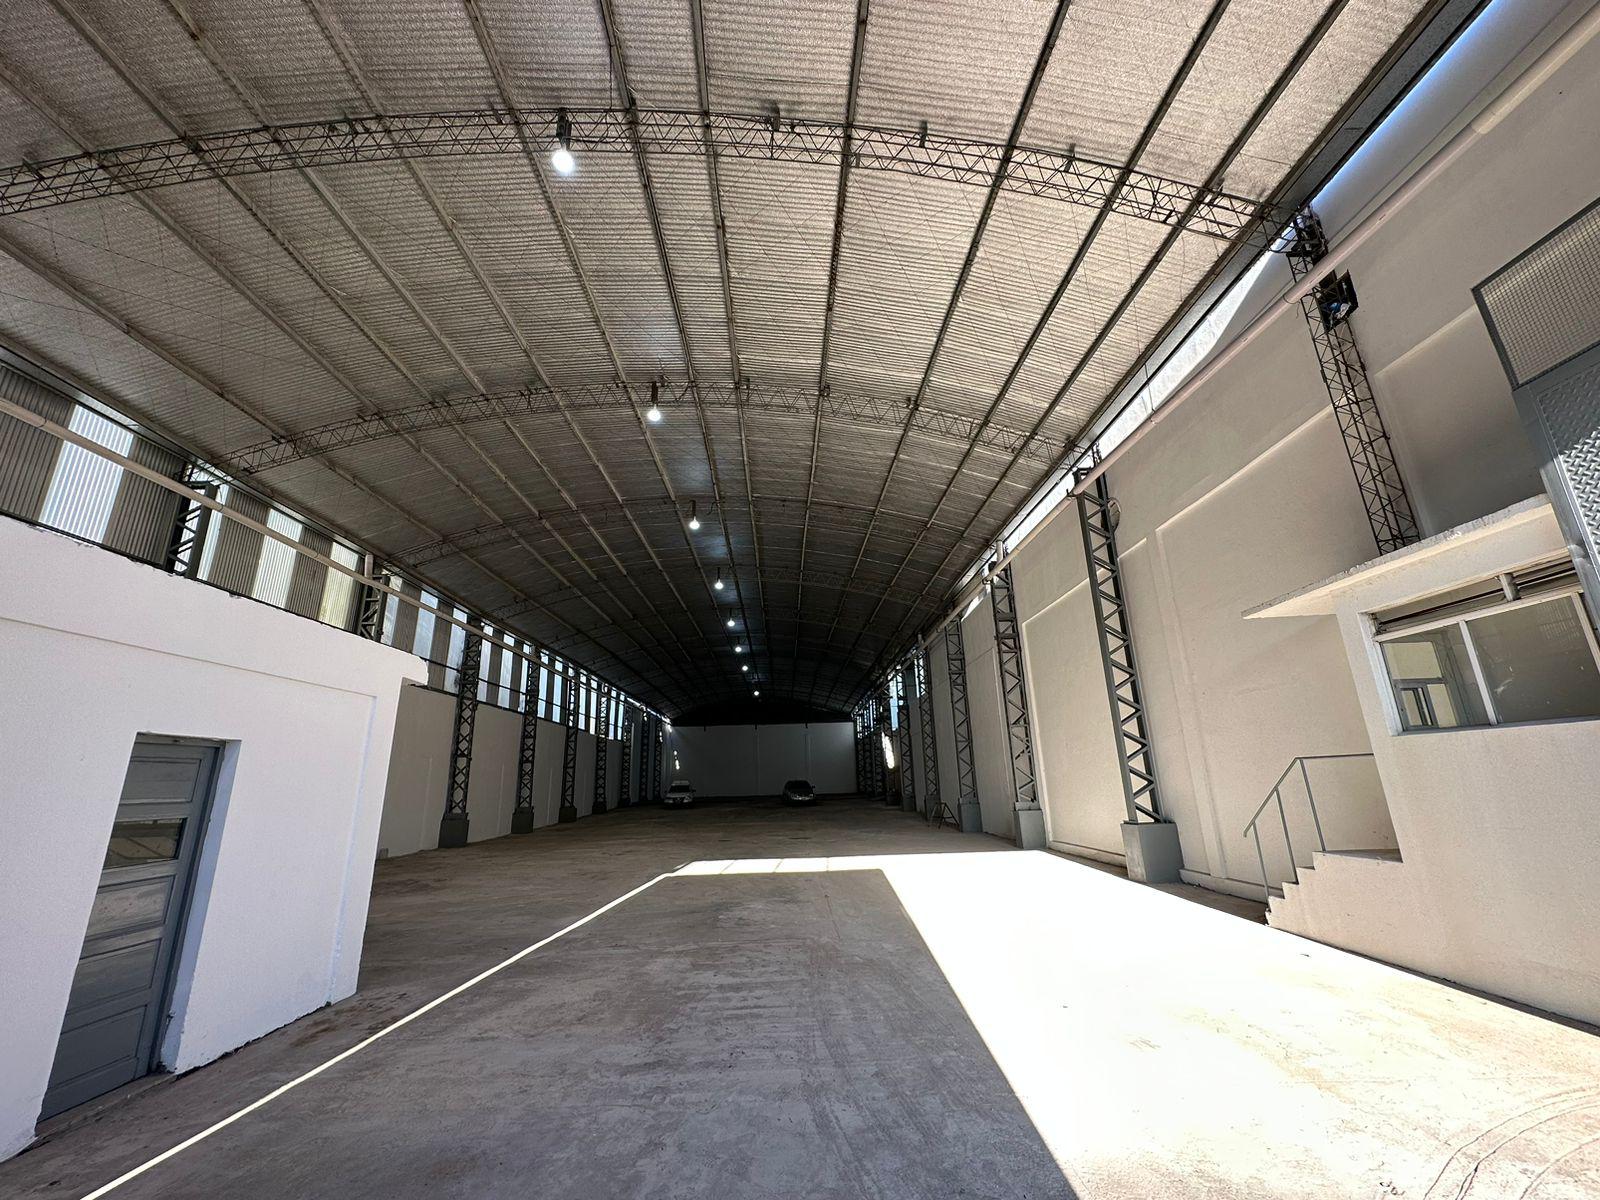 Depósito - Galpón de 1100 m2. en Lanús con doble entrada contenedor en ALQUILER